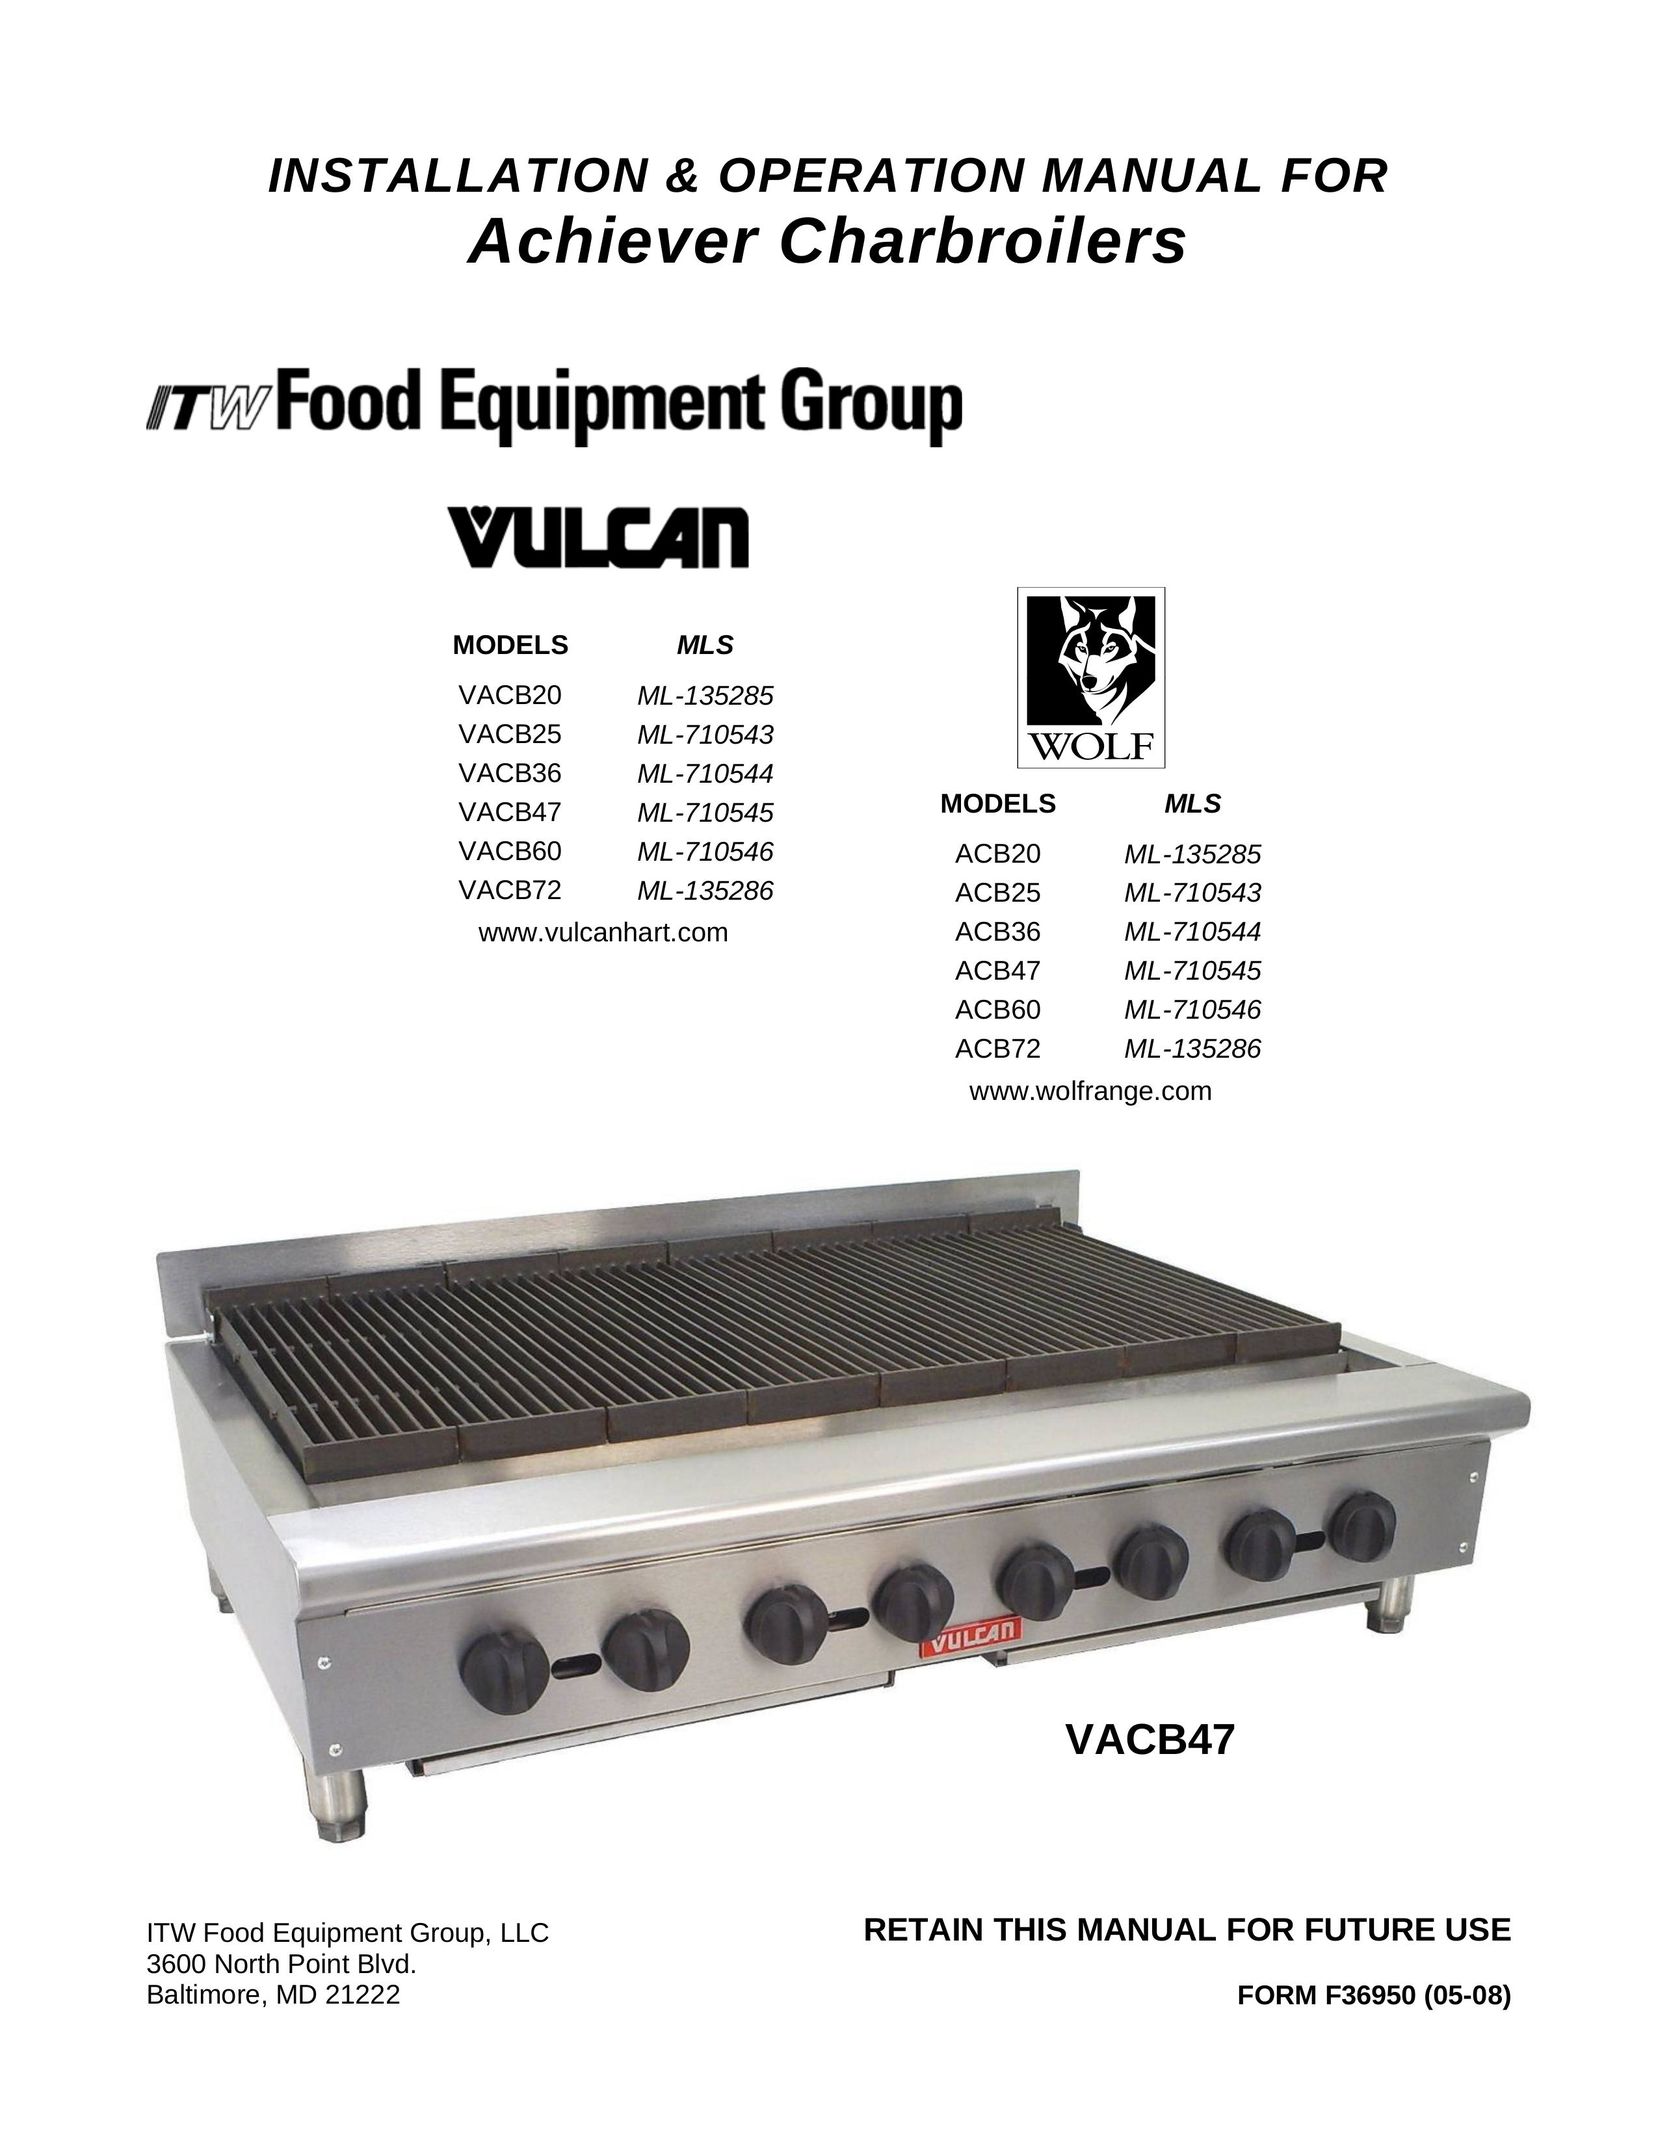 Vulcan-Hart ACB47 ML-710545 Oven User Manual